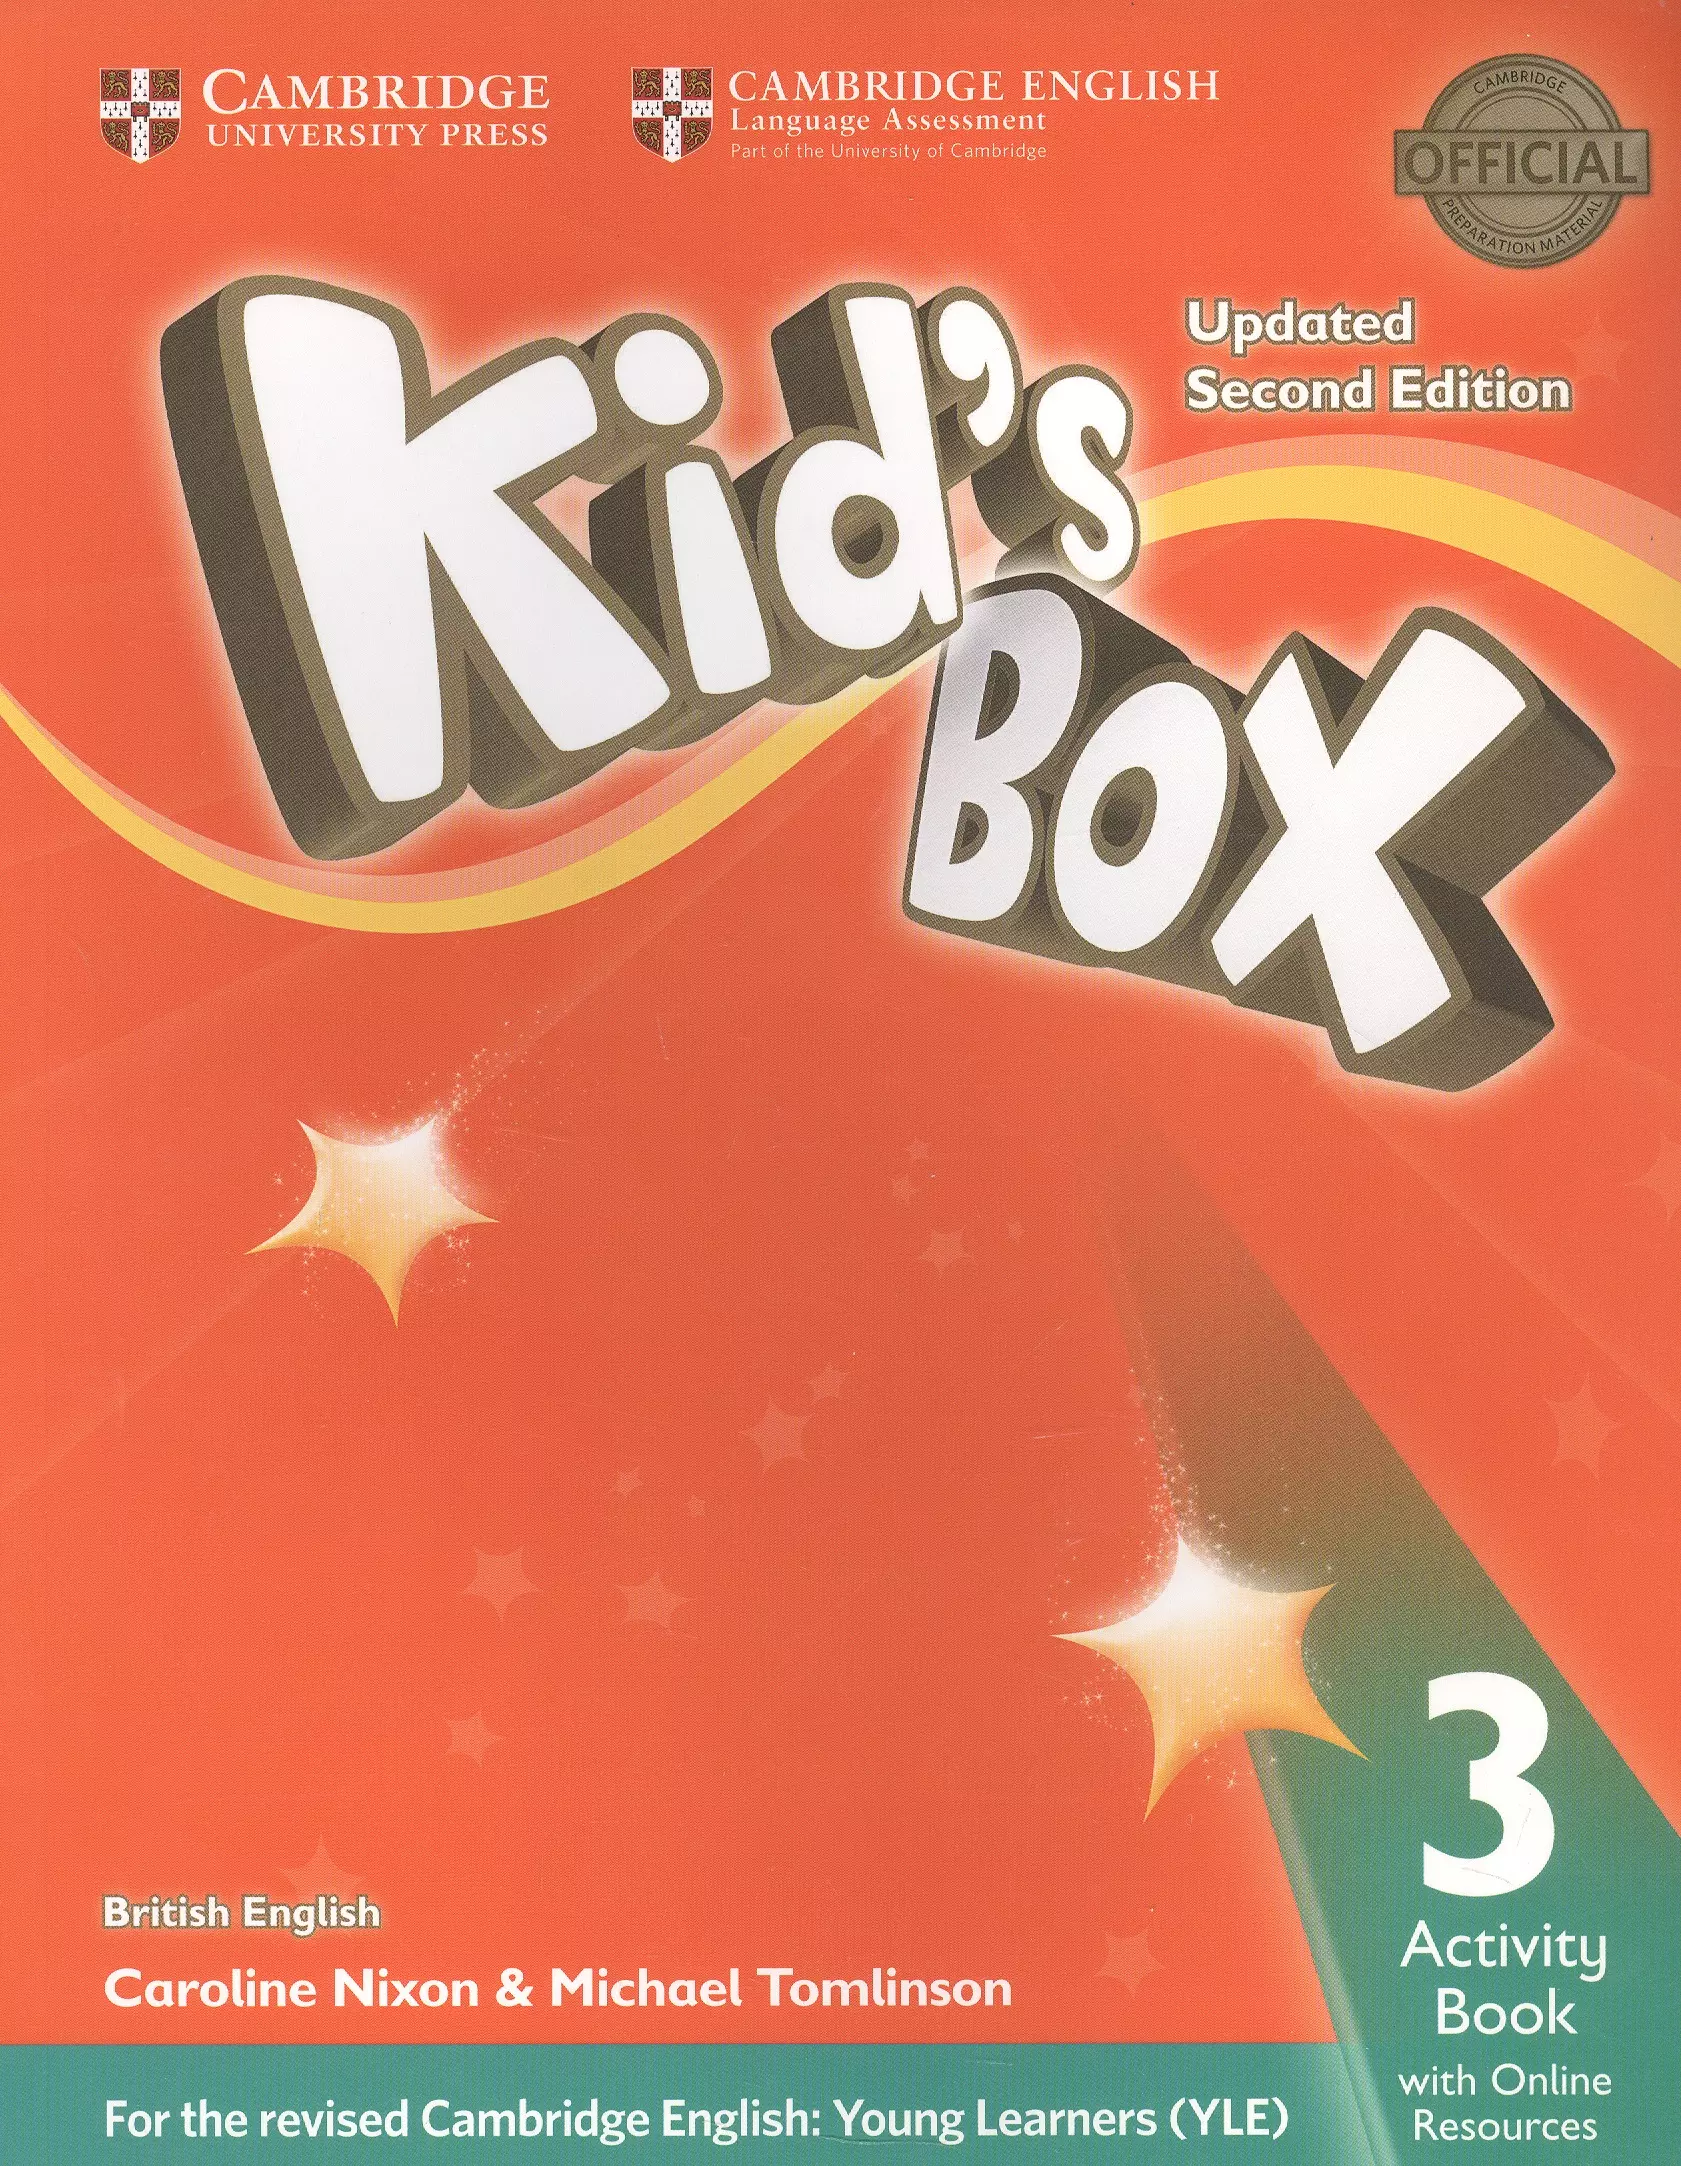 Tomlinson Michael, Nixon Caroline - Kids Box. British English. Activity Book 3 with Online Resources. Updated Second Edition